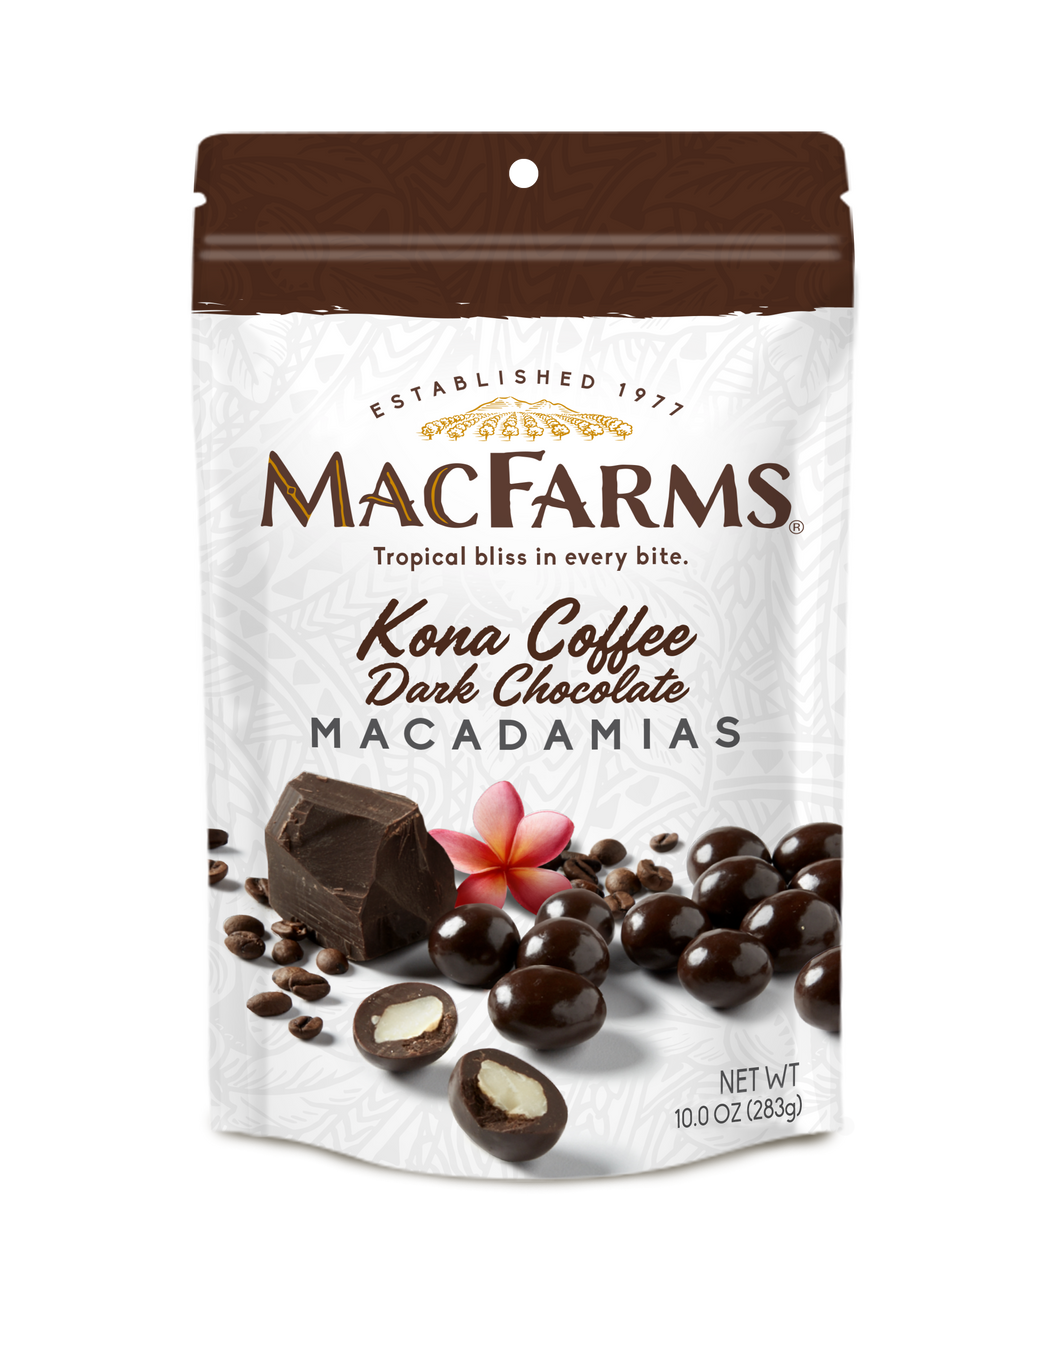 Kona Coffee Dark Chocolate Macadamia Nuts 10 oz